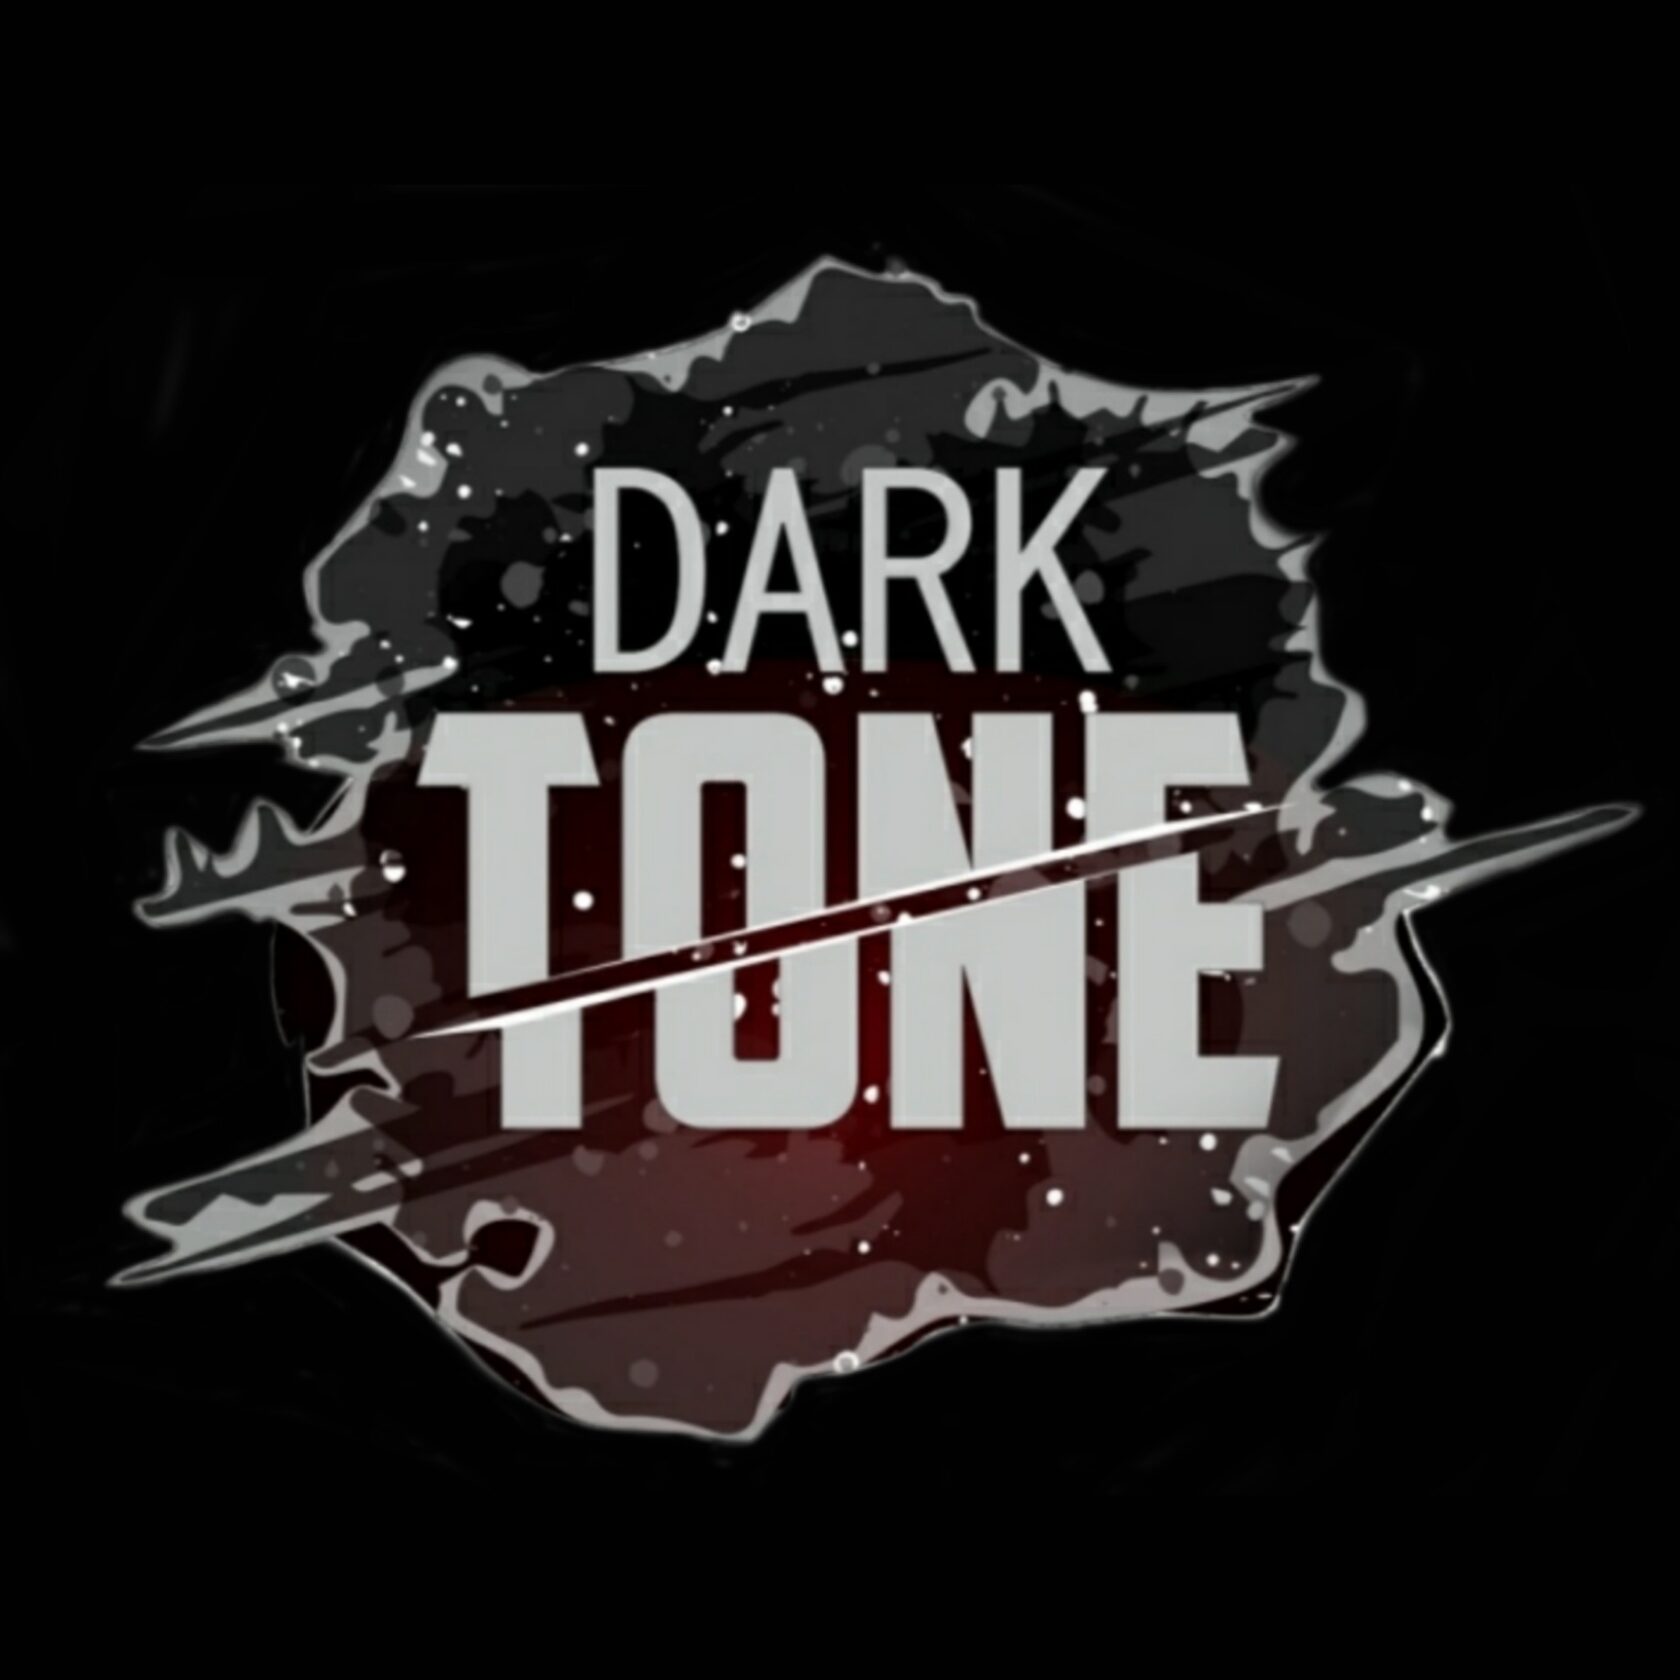 Dark tone. Dark Company.